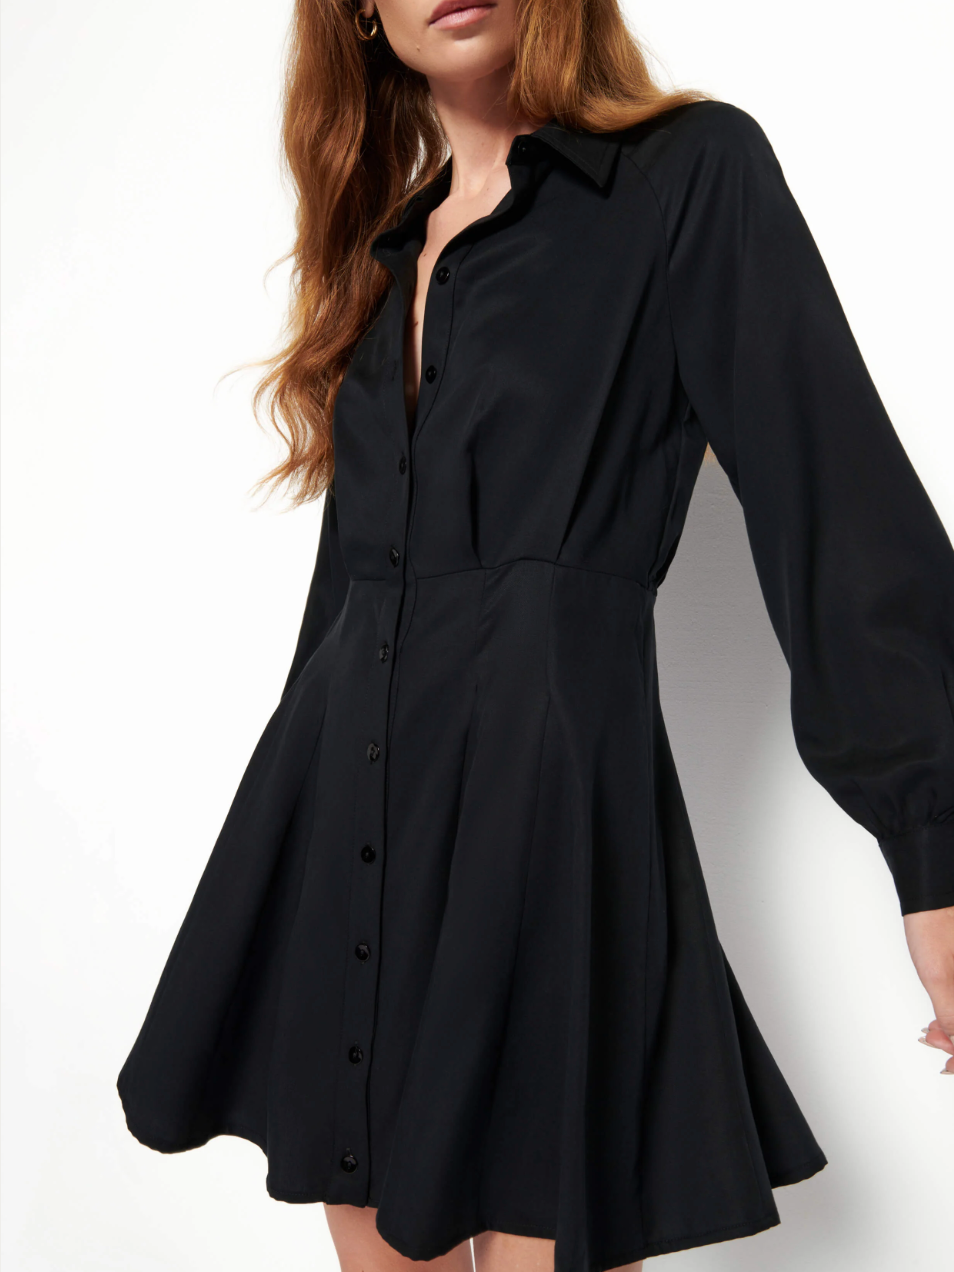 TANYA BUTTON UP MINI DRESS IN BLACK - Romi Boutique